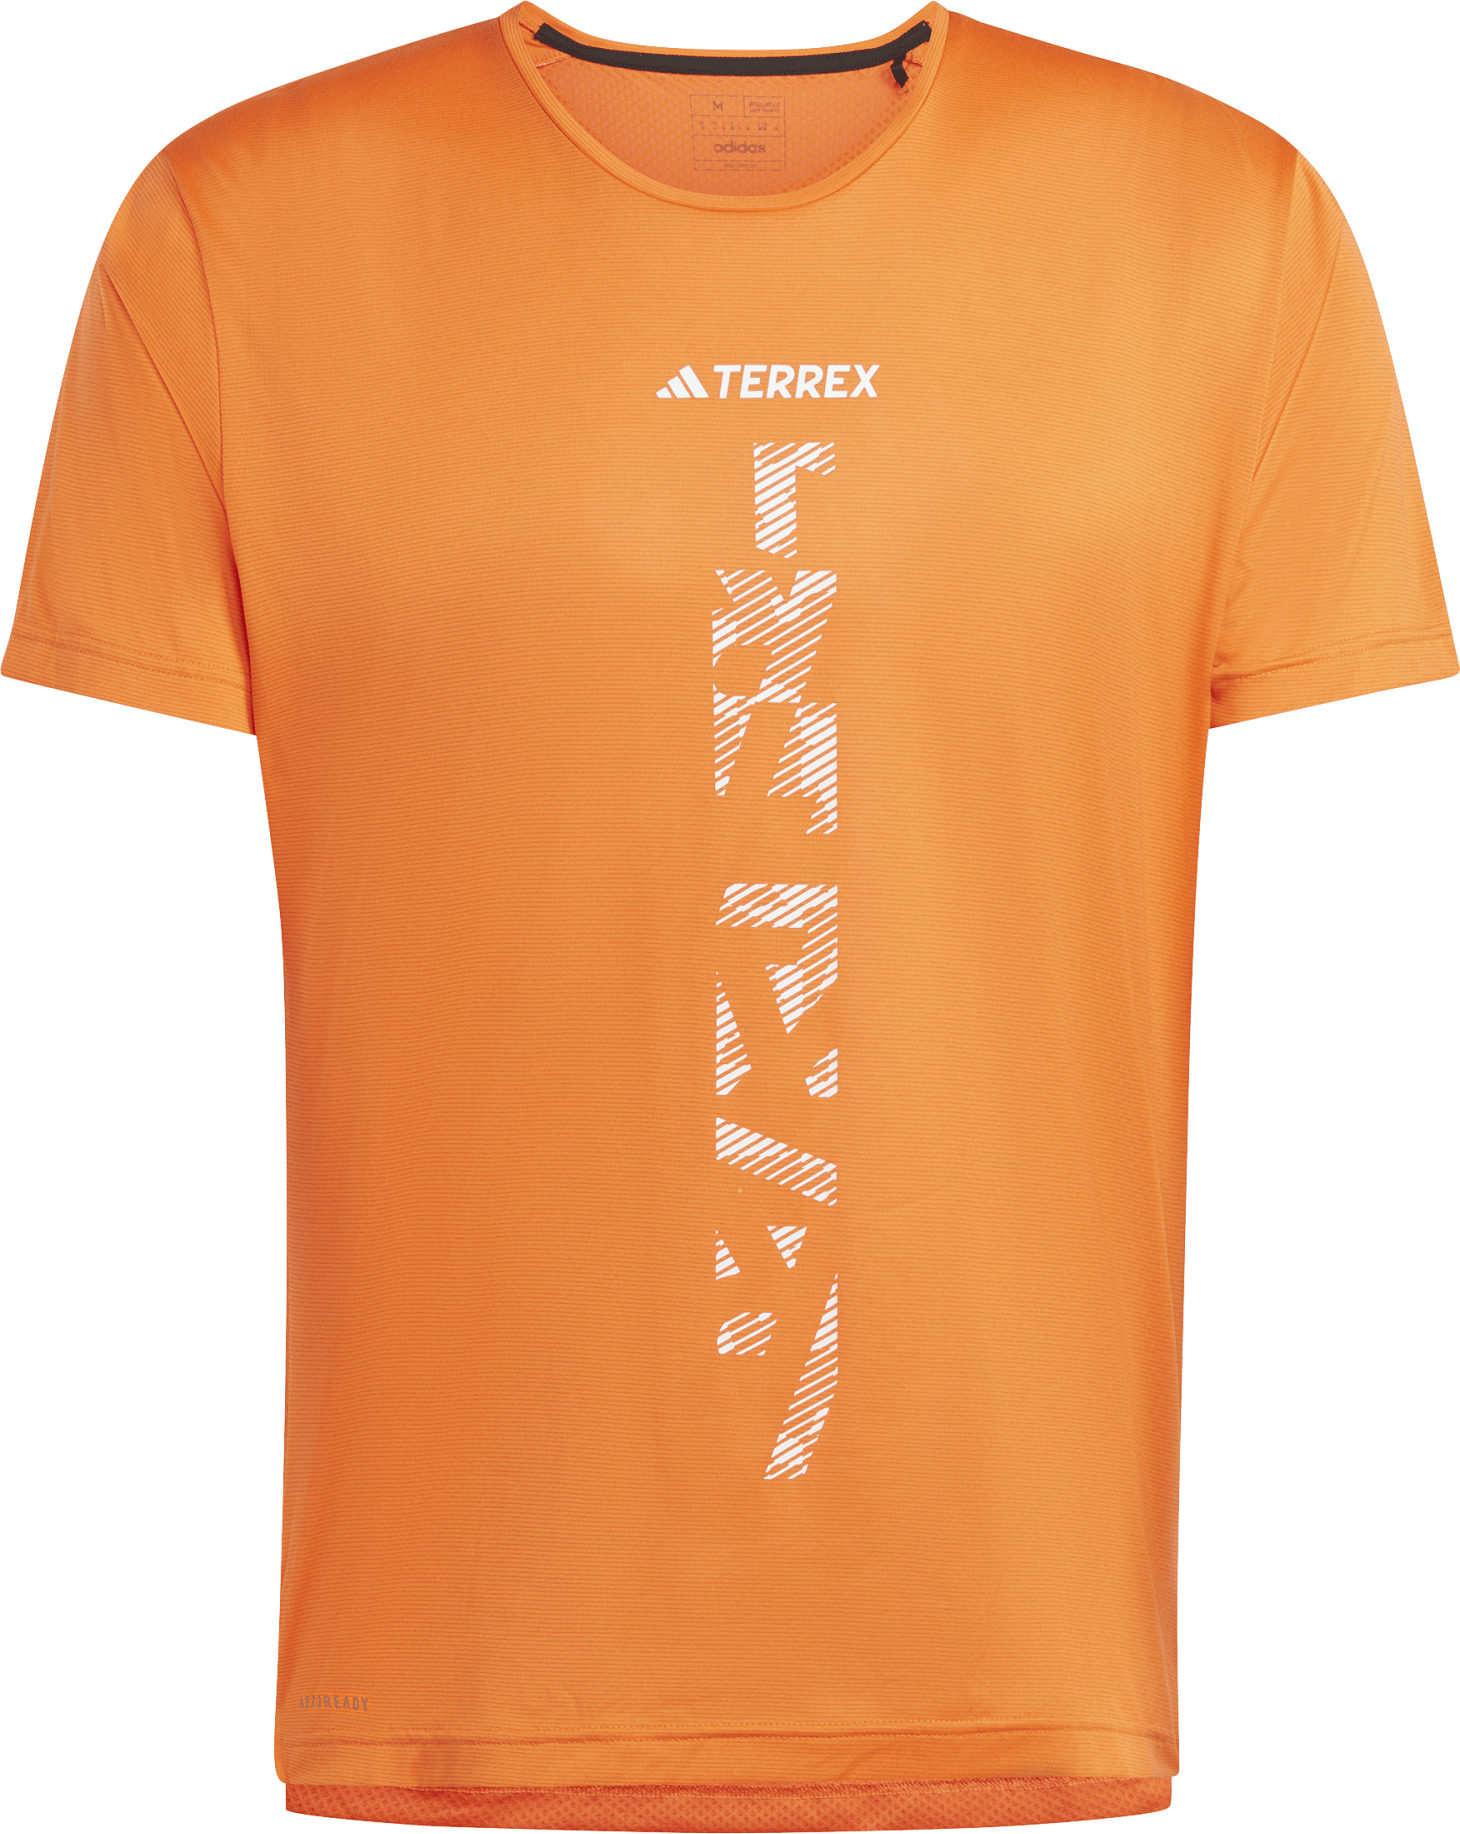 Adidas Men's Terrex Agravic Trail Running T-Shirt Semi Impact Orange/White